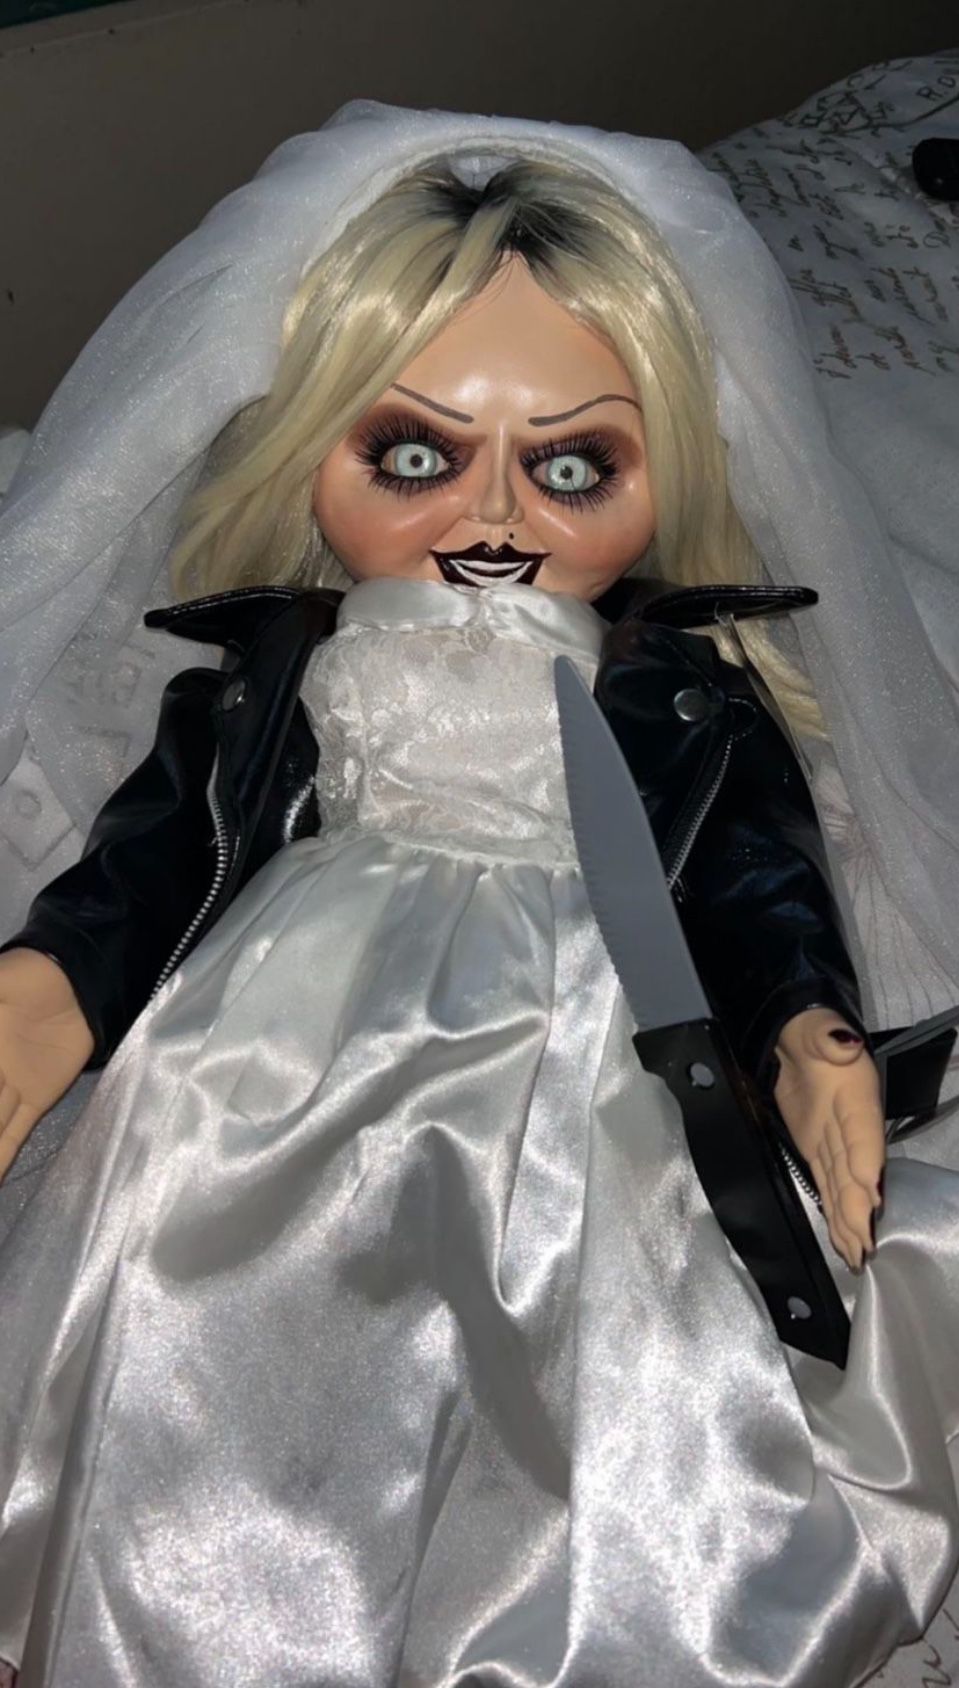 Chuckys Bride Doll